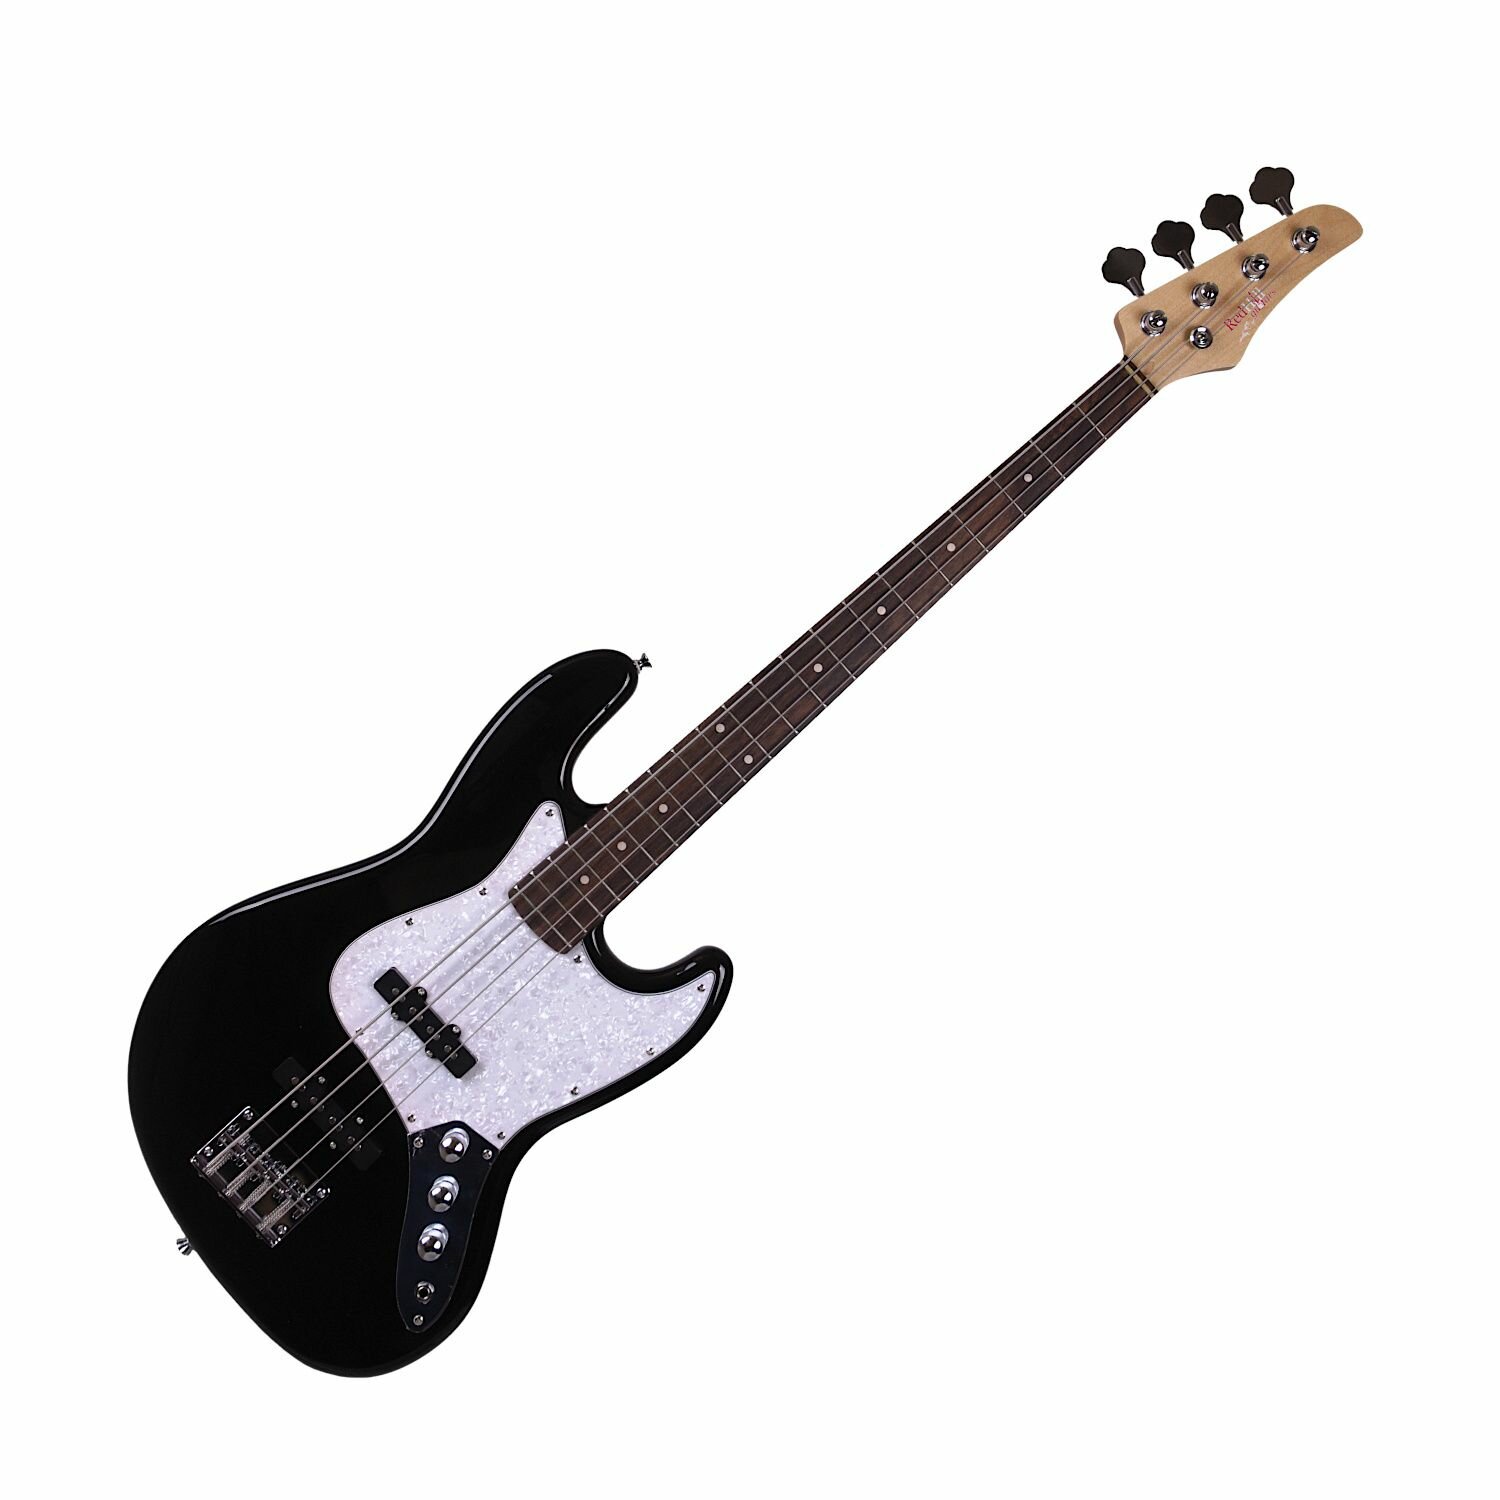 REDHILL JB200 BK - бас-гитара 4-стр J+J 864 мм корпус тополь гриф клен цвет черный